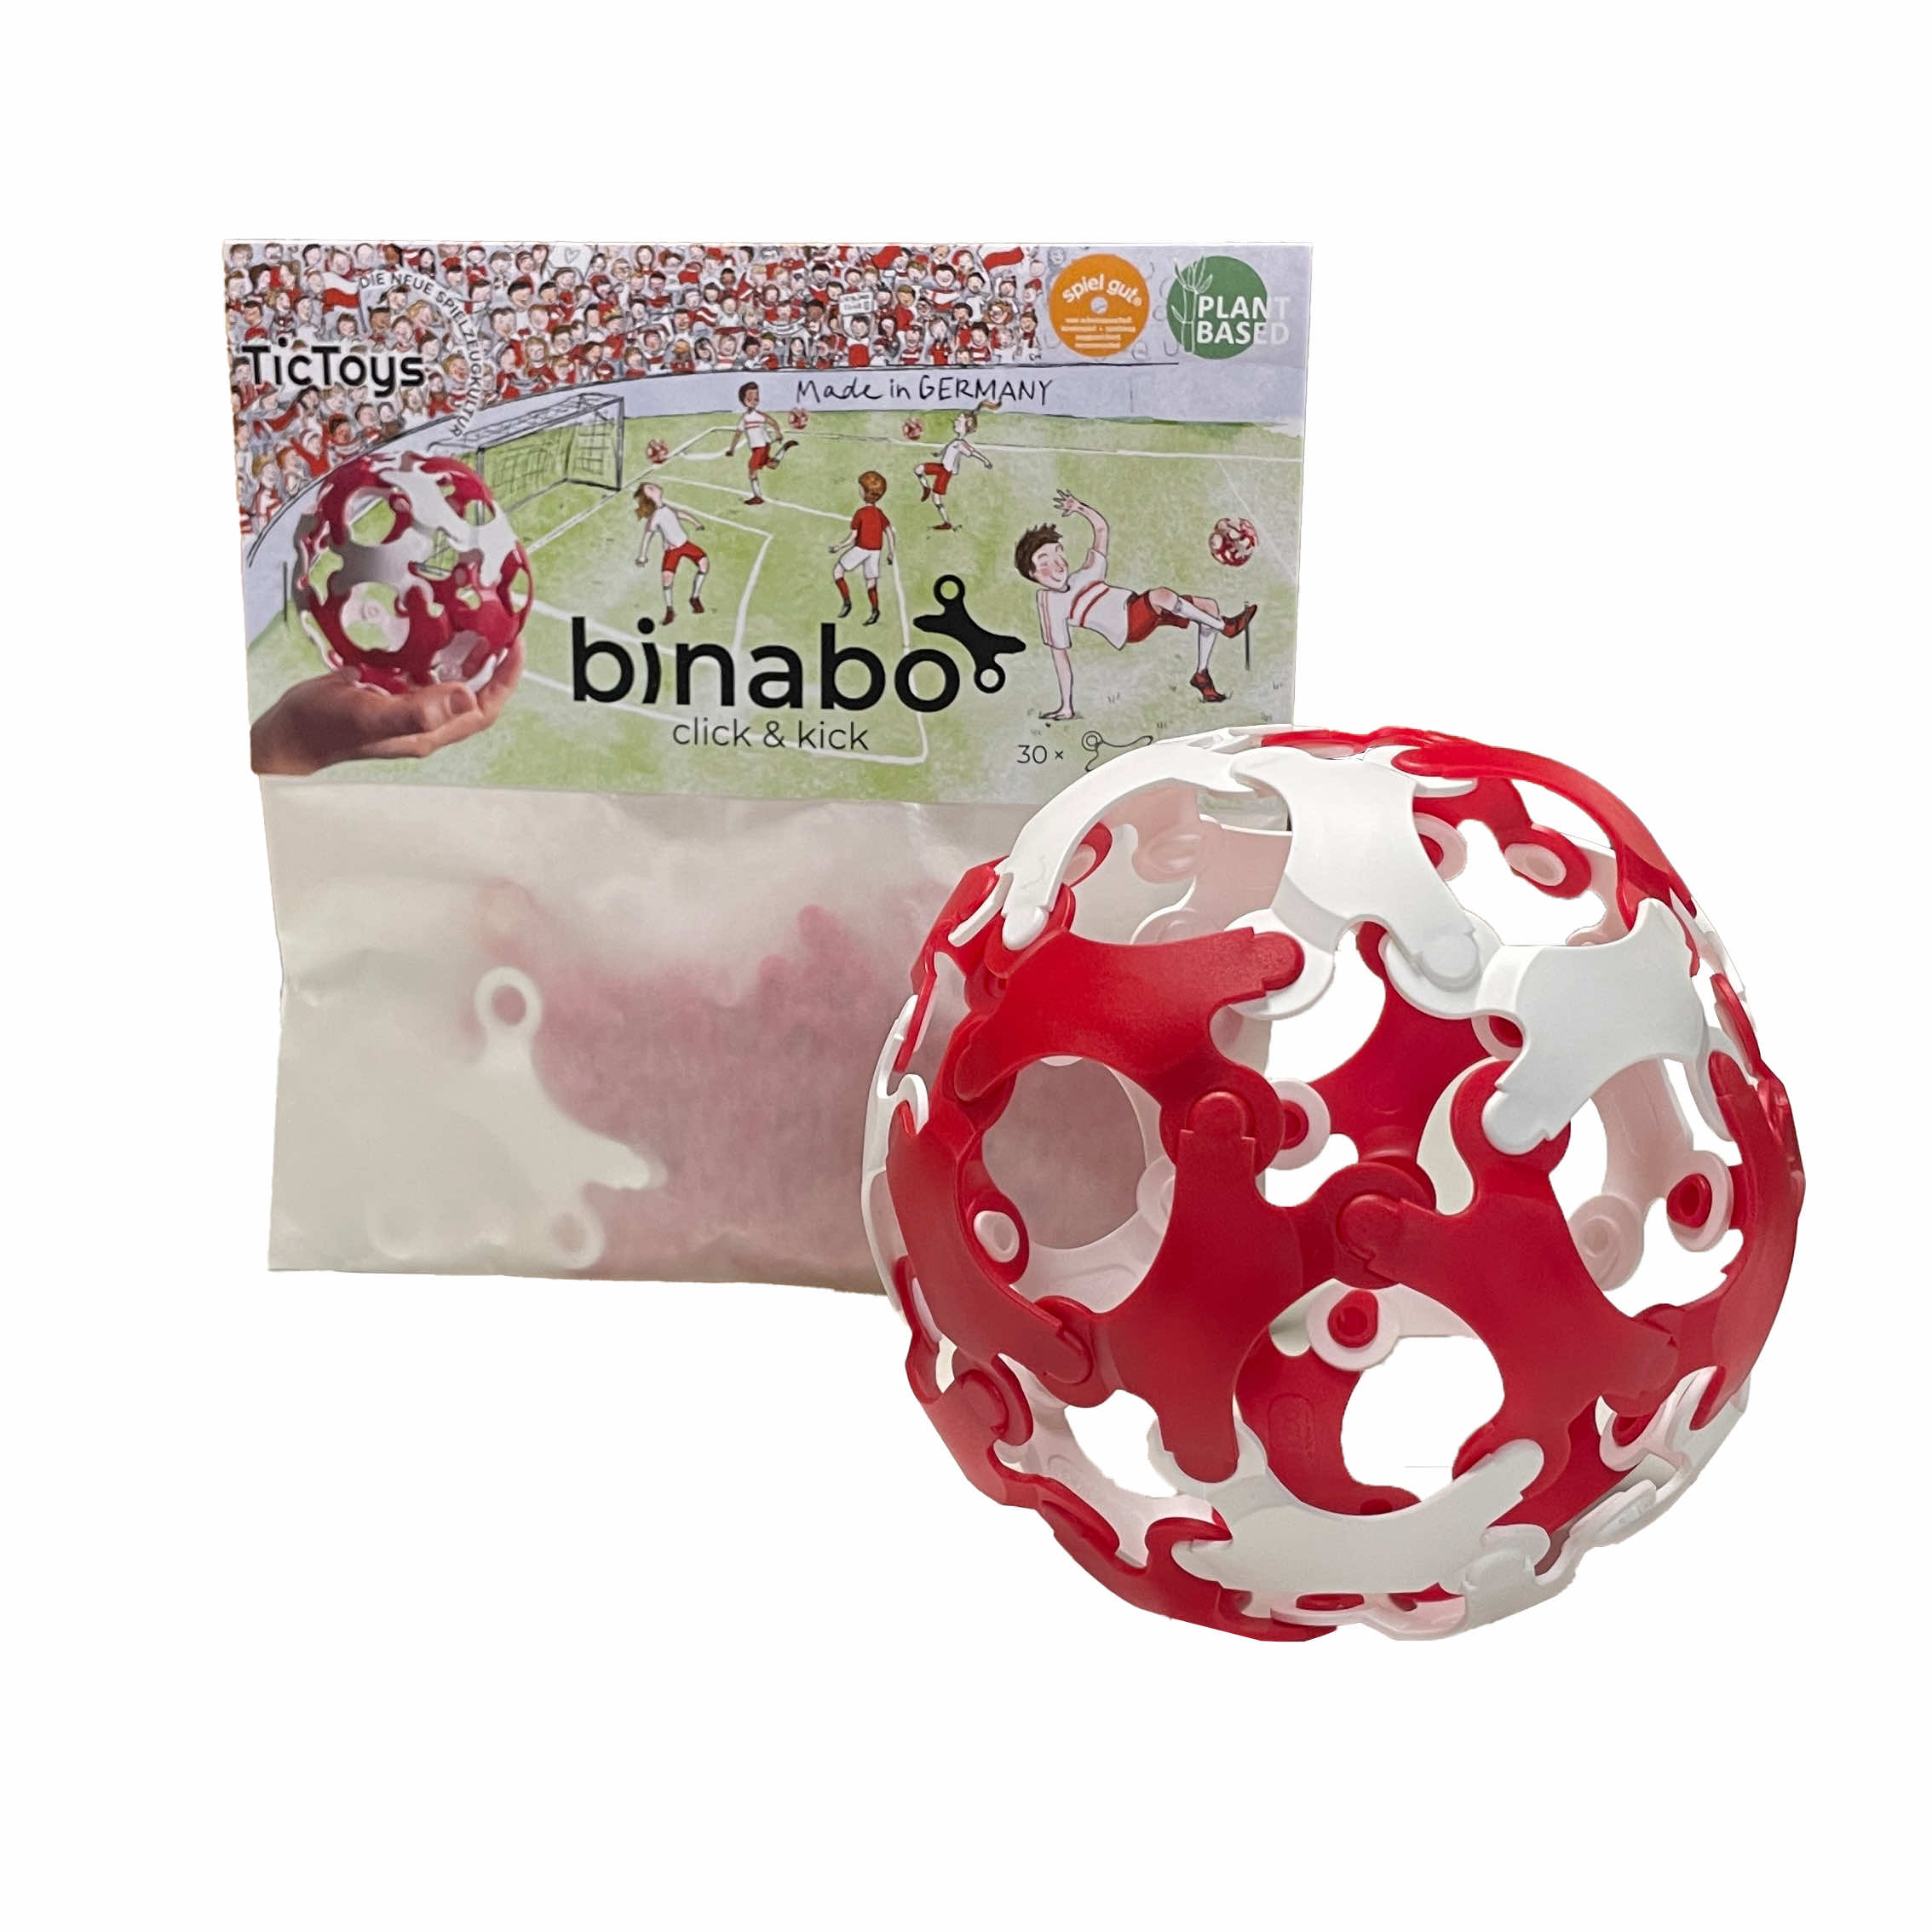 Binabo „click & kick“ display red & white